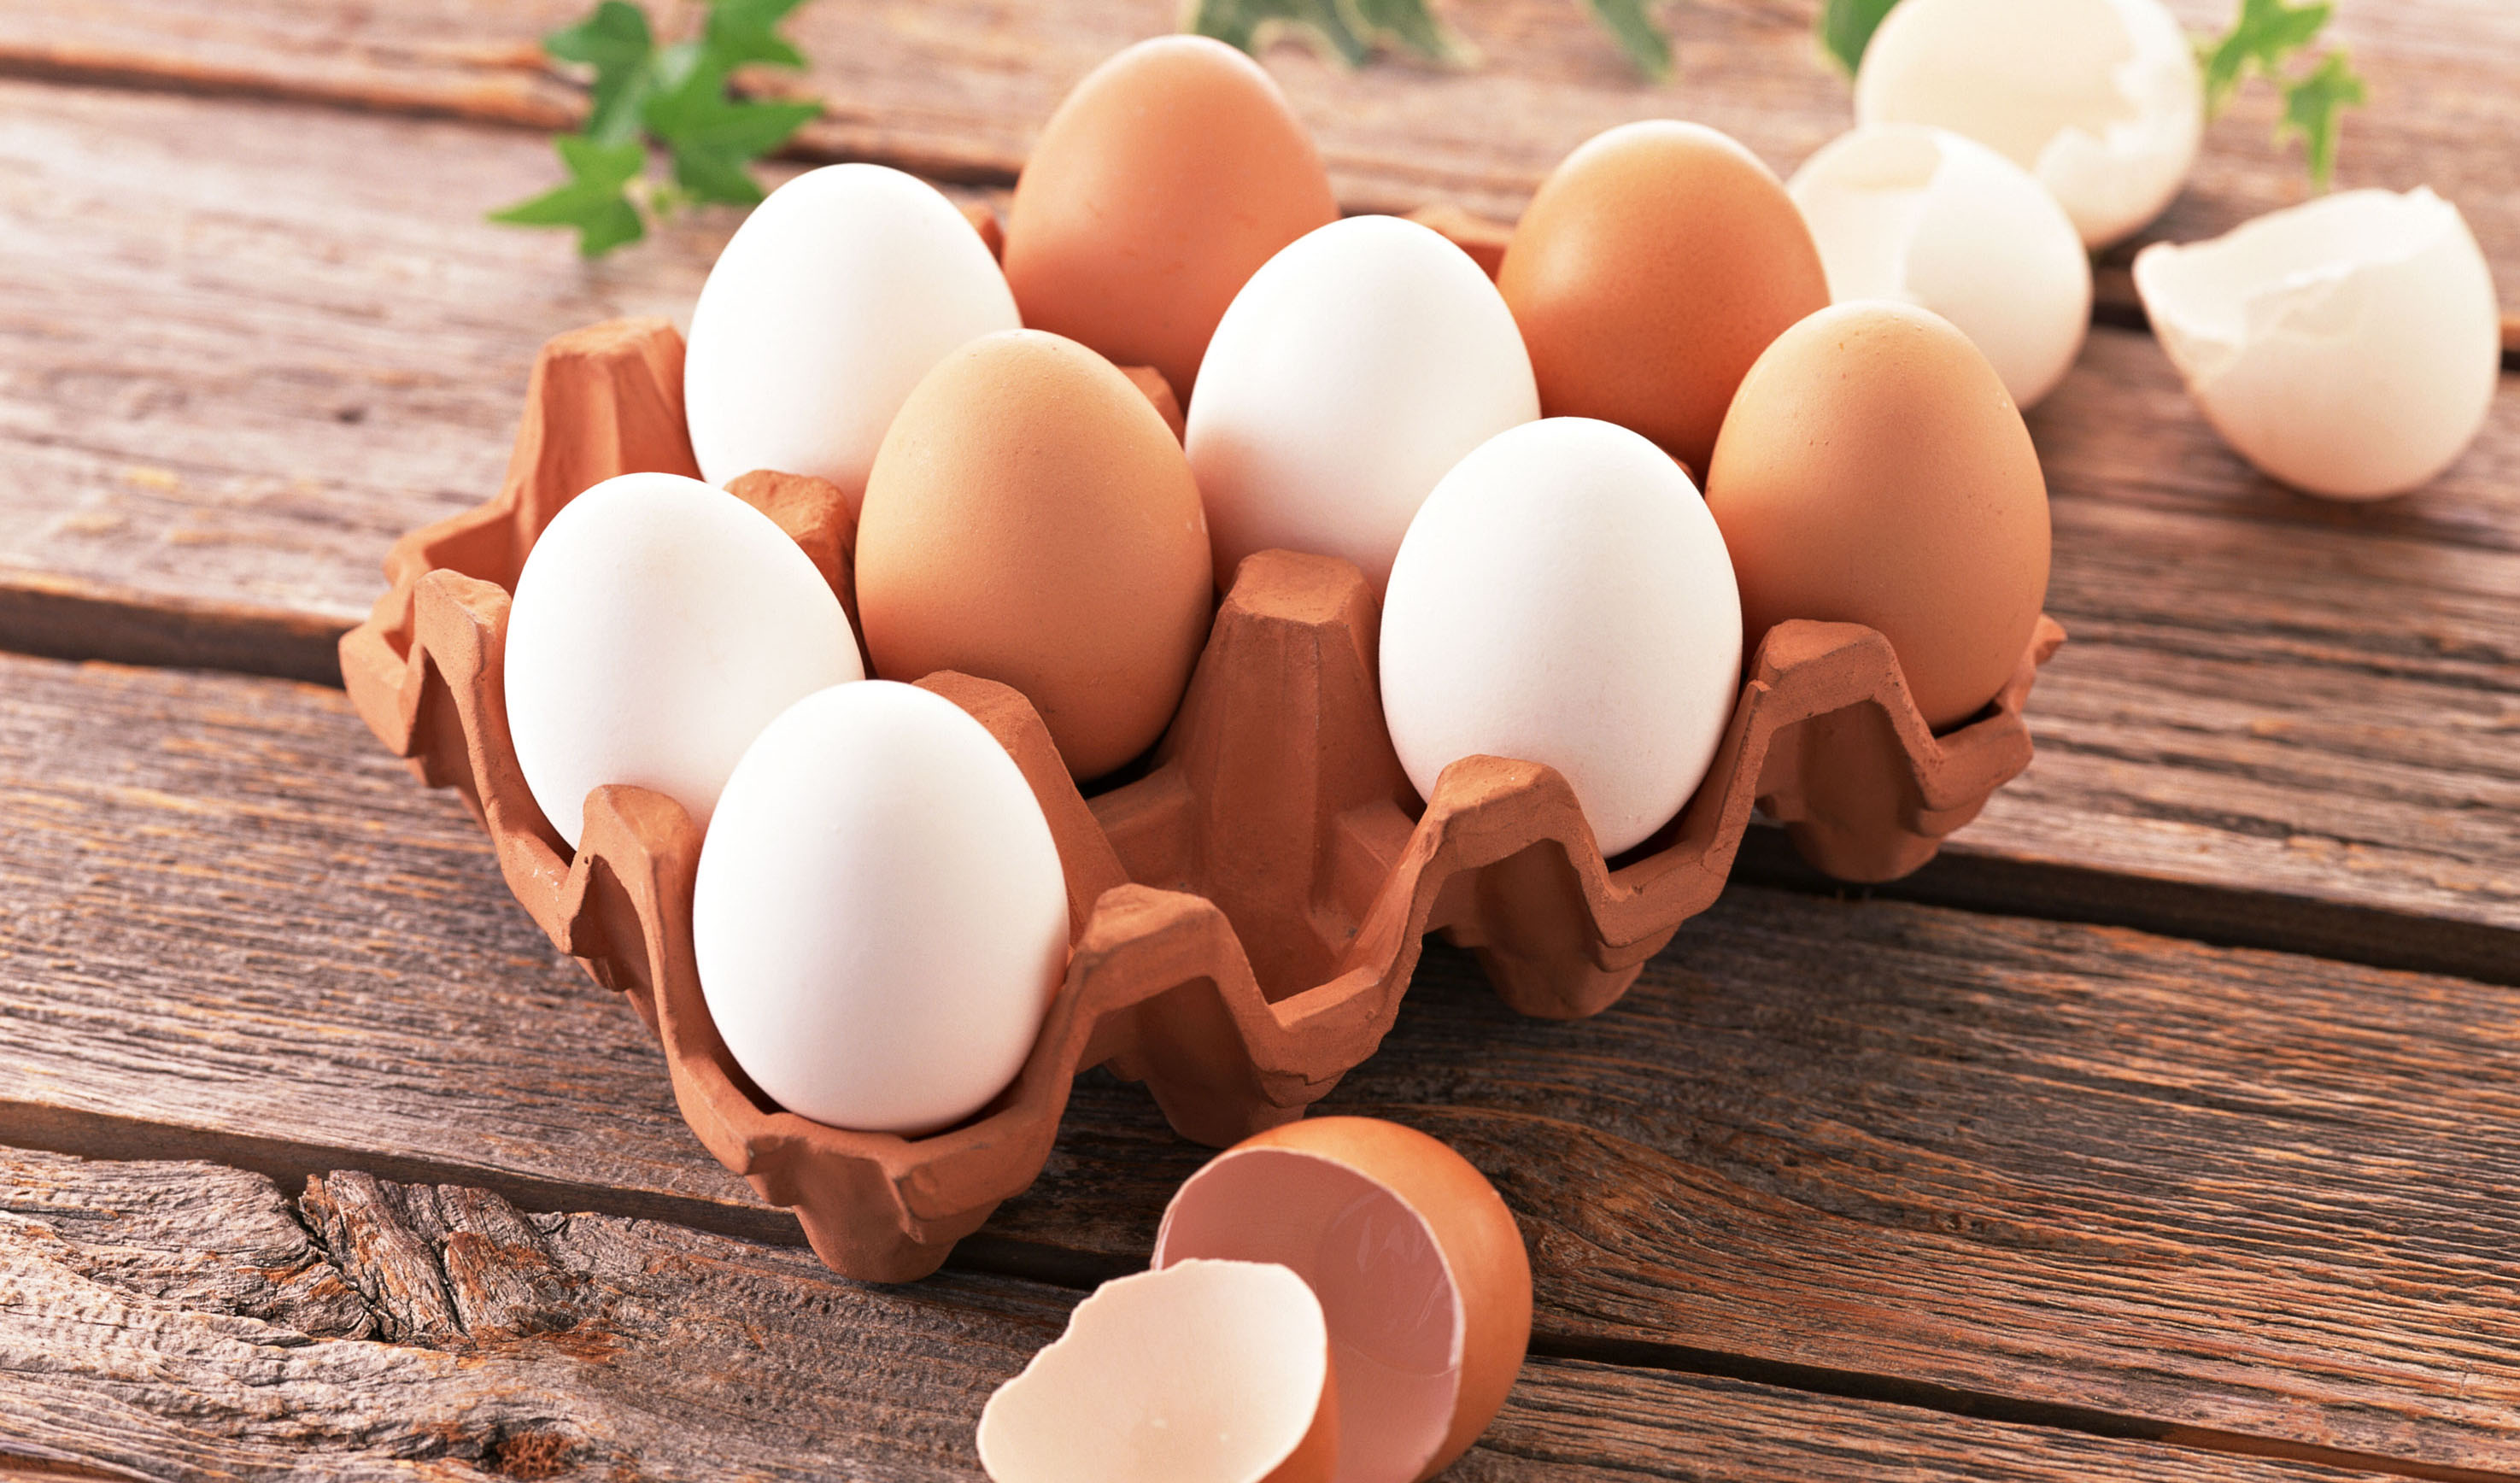 نرخ پیشنهادی هر کیلو تخم‌مرغ ۴۸ هزارتومان است